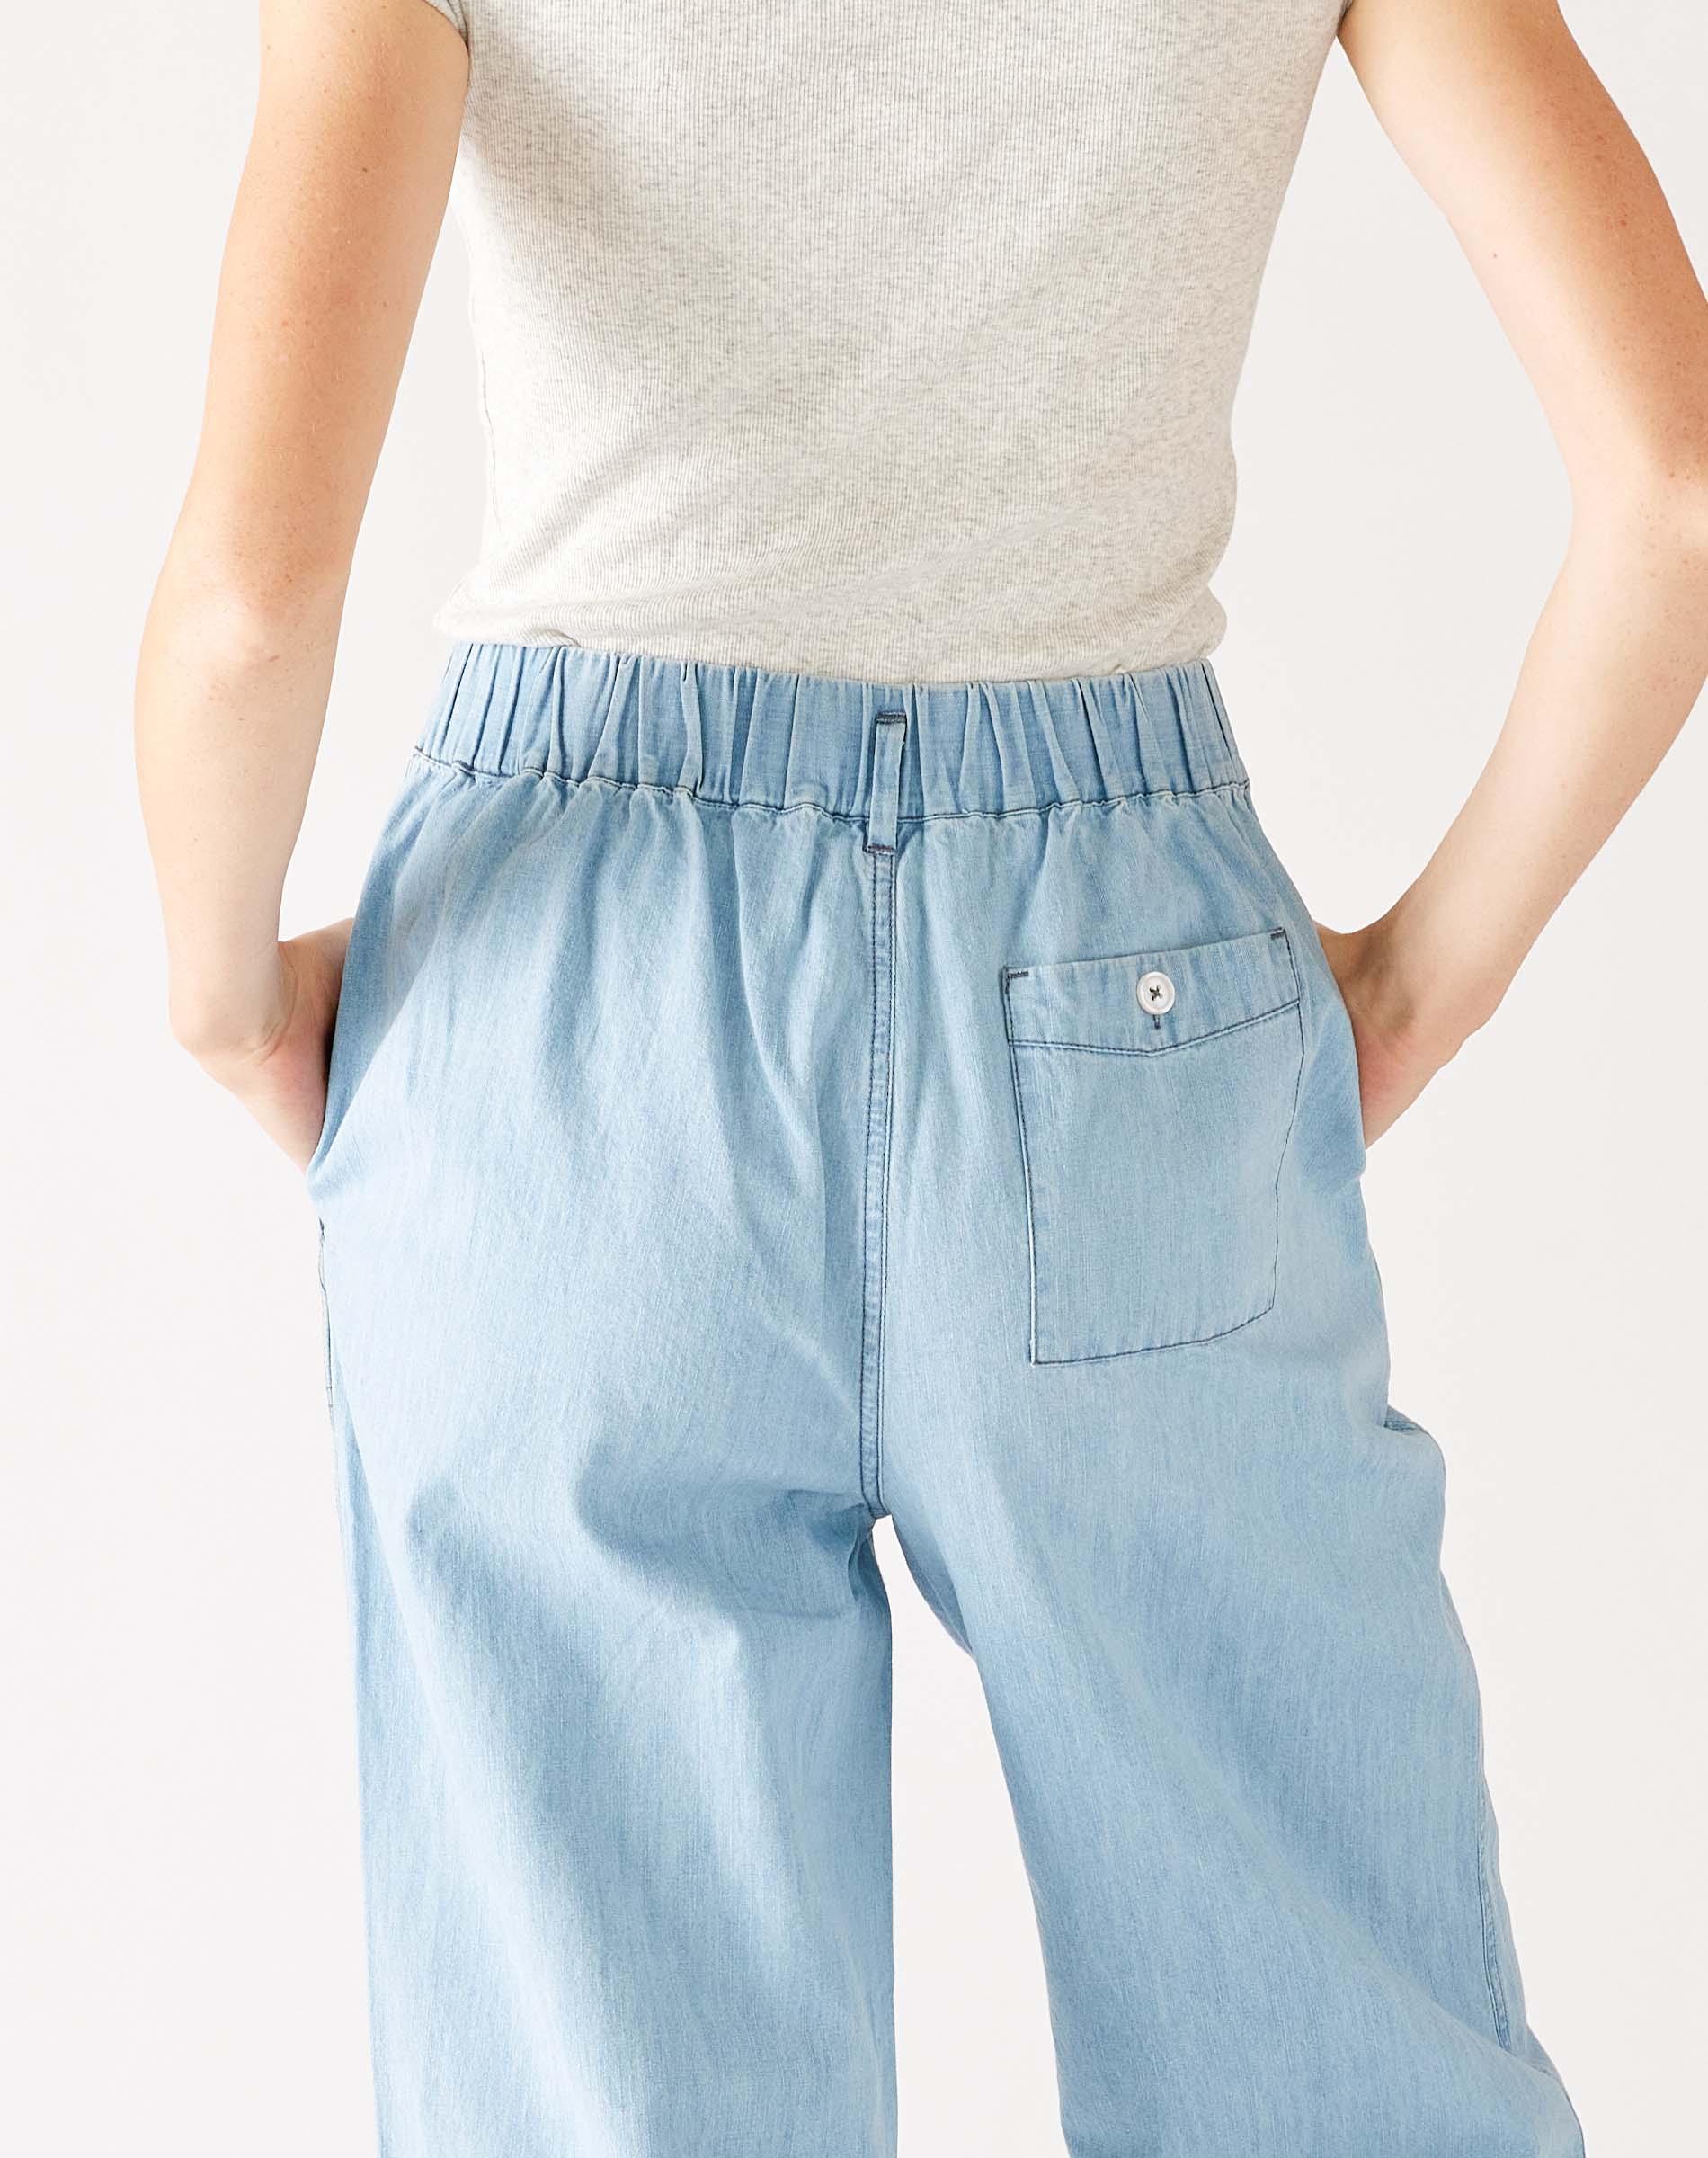 Women's Light Blue Wide Leg Deep Pocket Jeans Rear View Close-up Pocket Detail